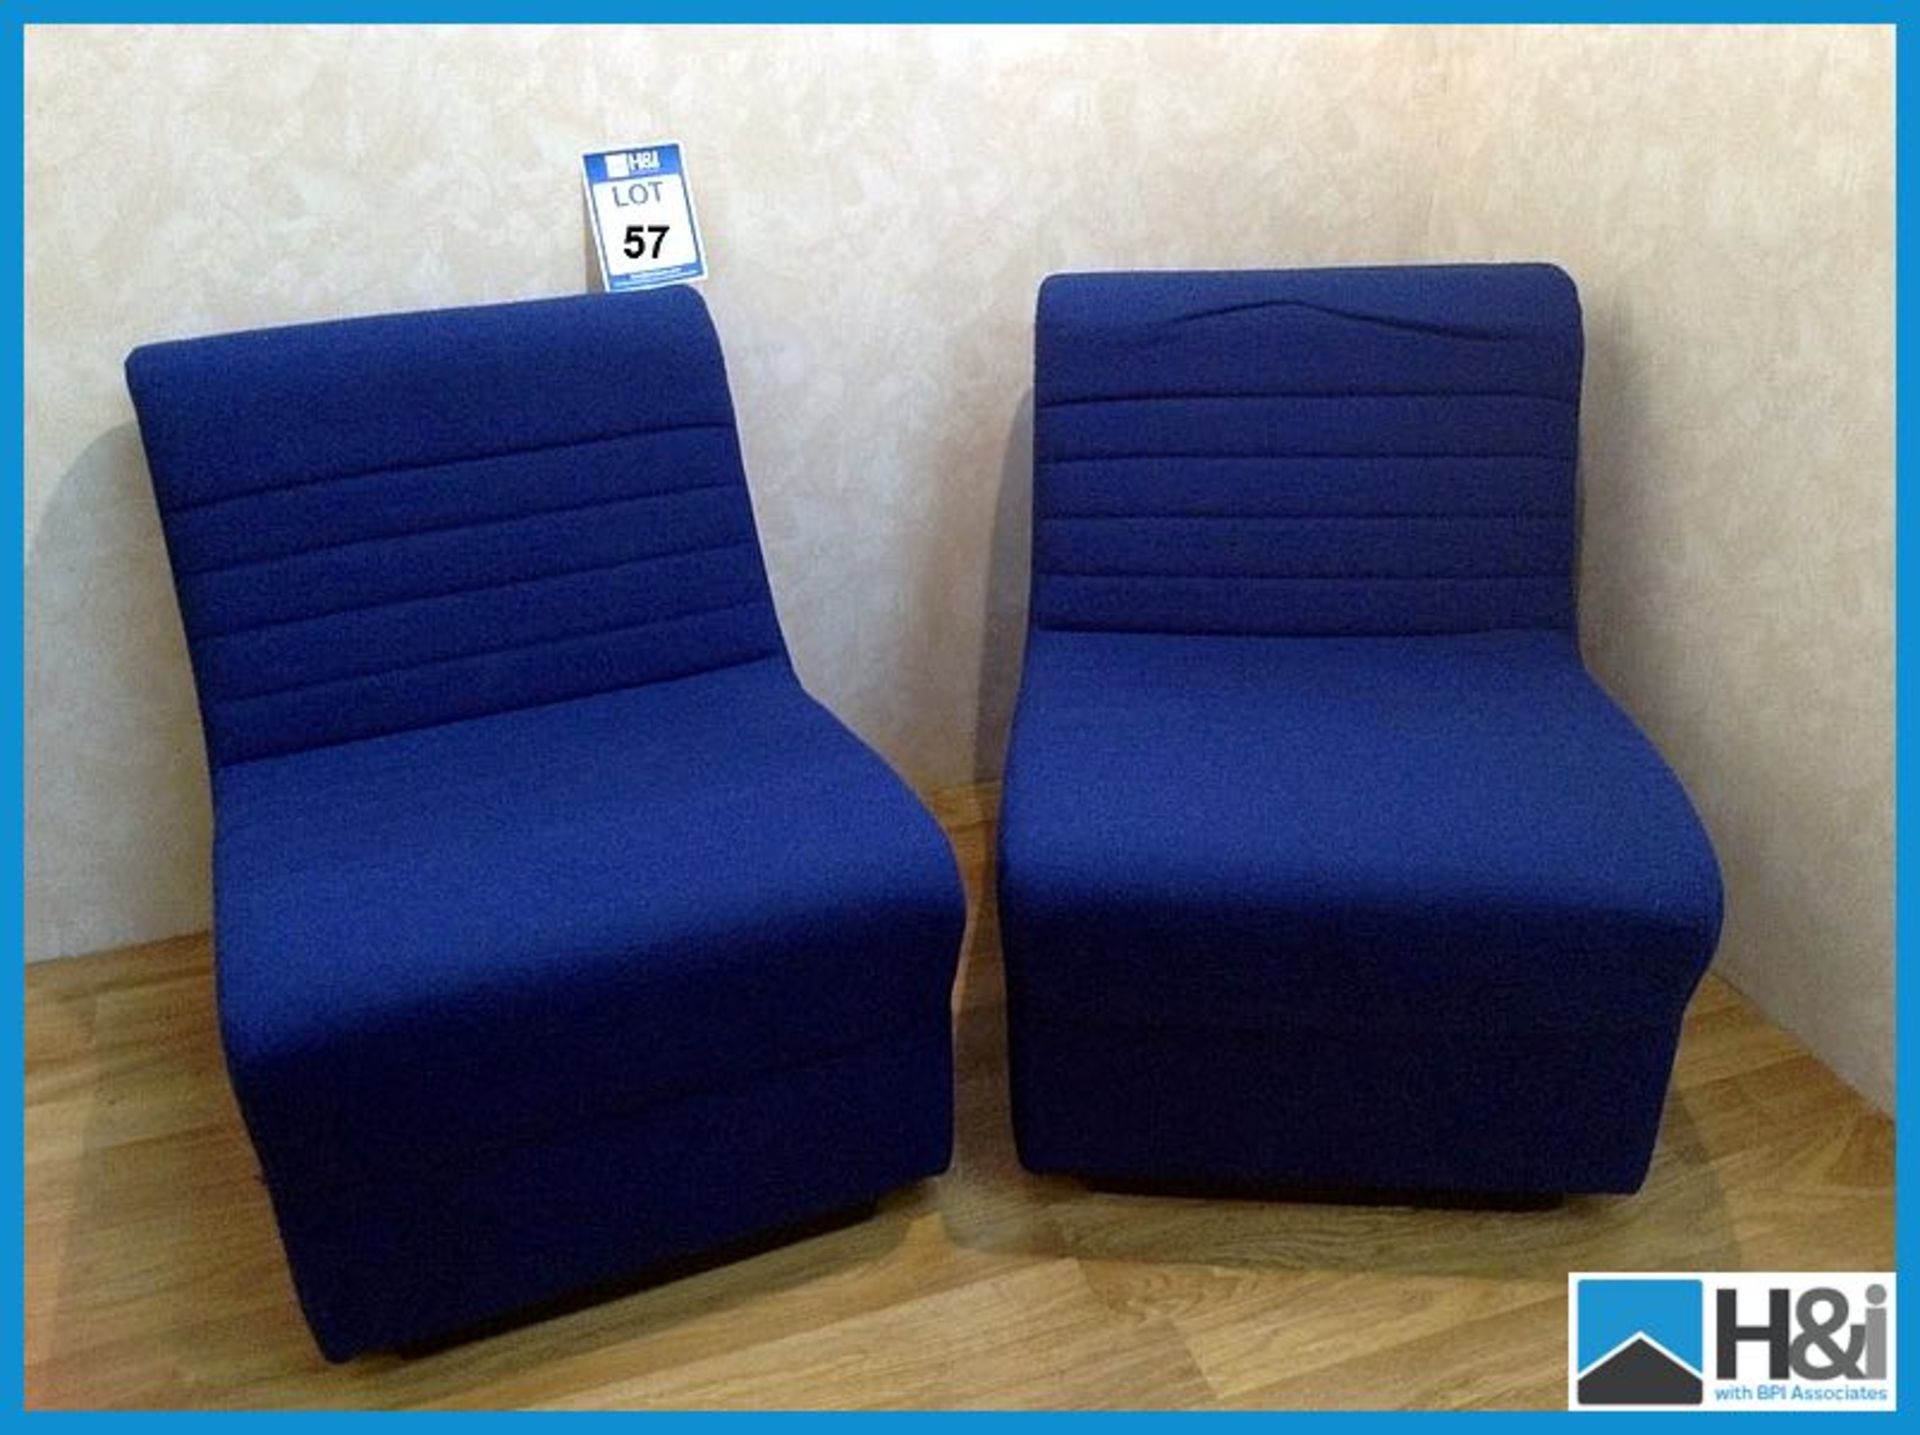 2 x New Malaga Blue single seater chair  - L15 Appraisal: Good Serial No: NA Location: Identihire,